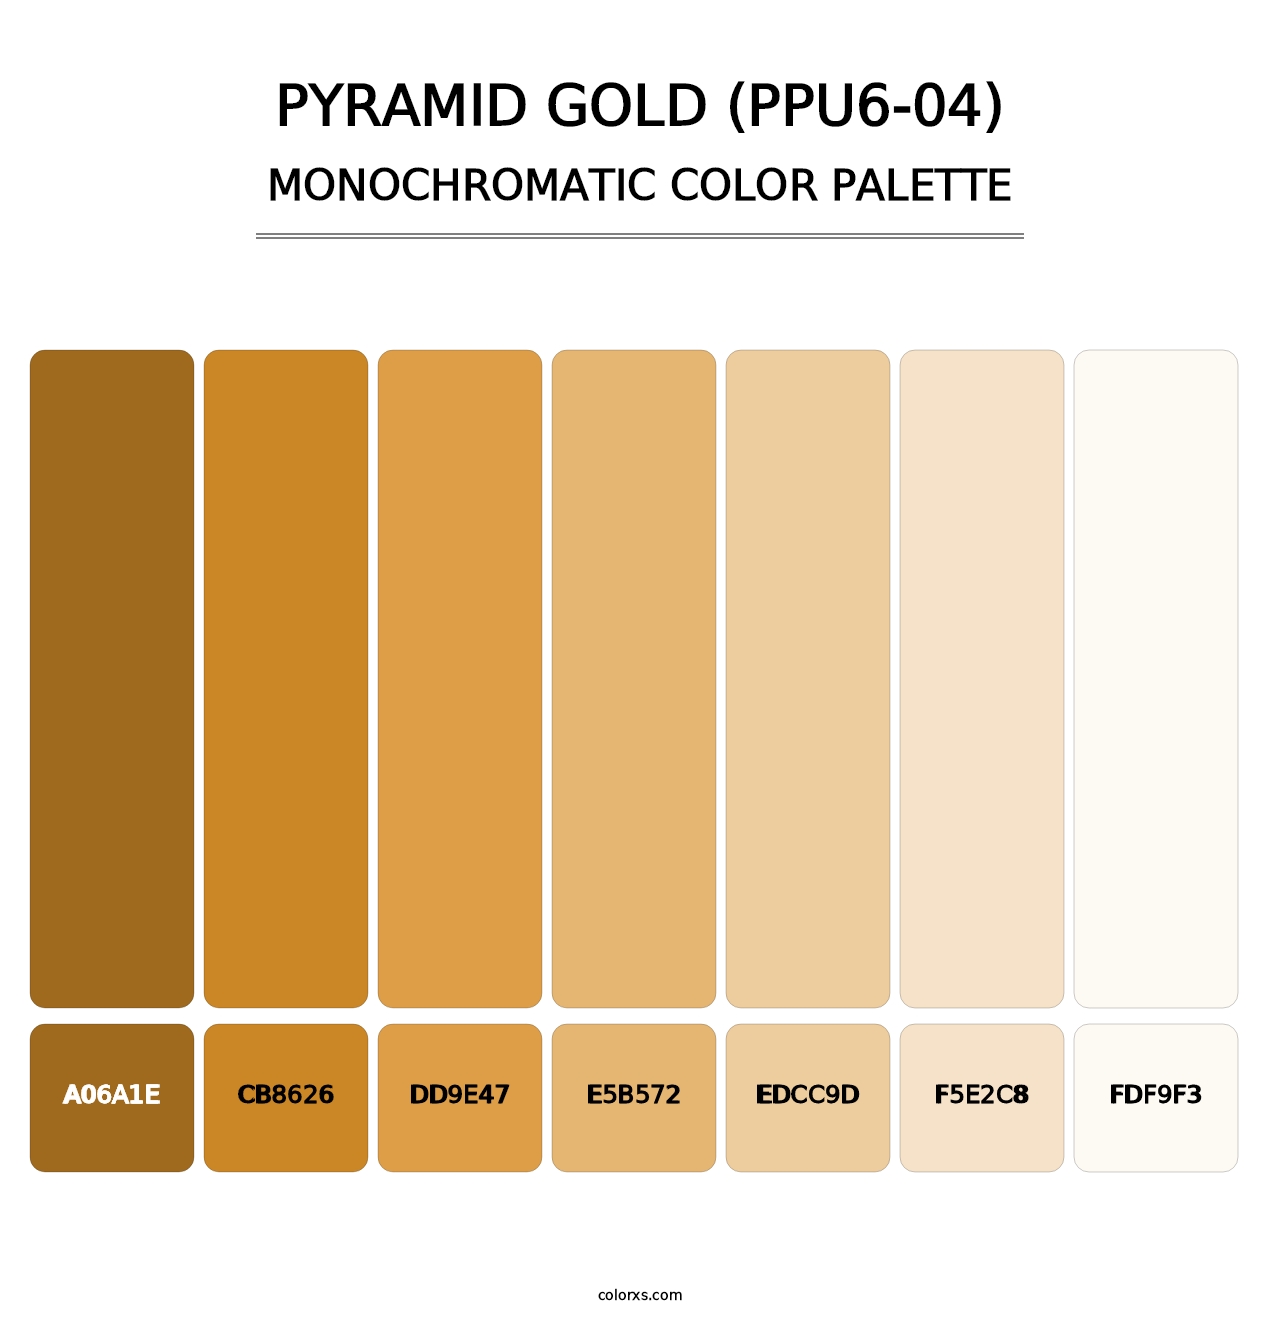 Pyramid Gold (PPU6-04) - Monochromatic Color Palette